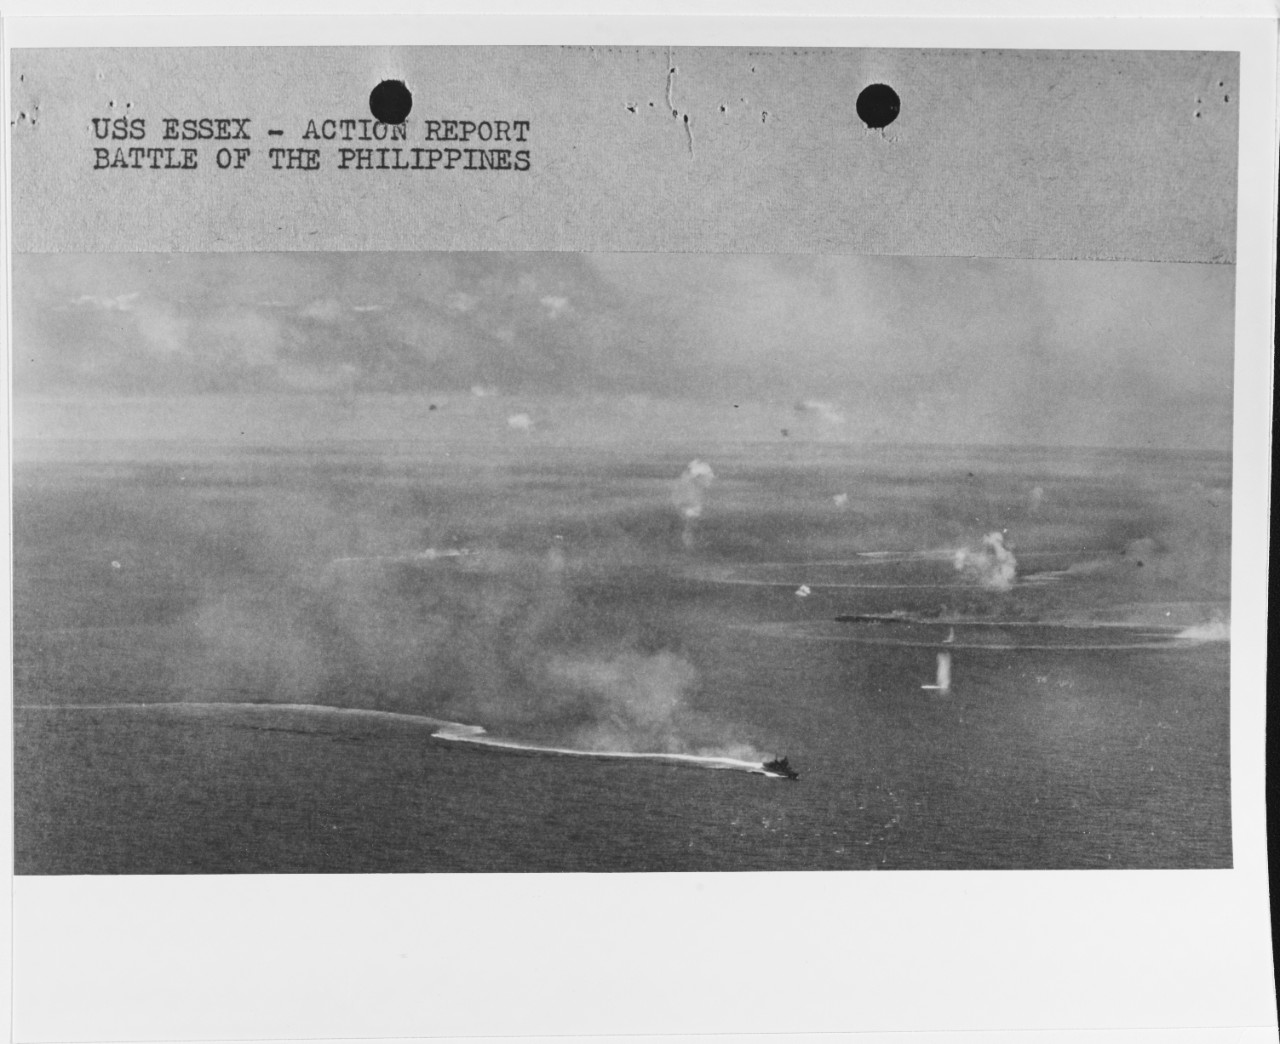 Battle off Cape Engaño, 25-26 October 1944